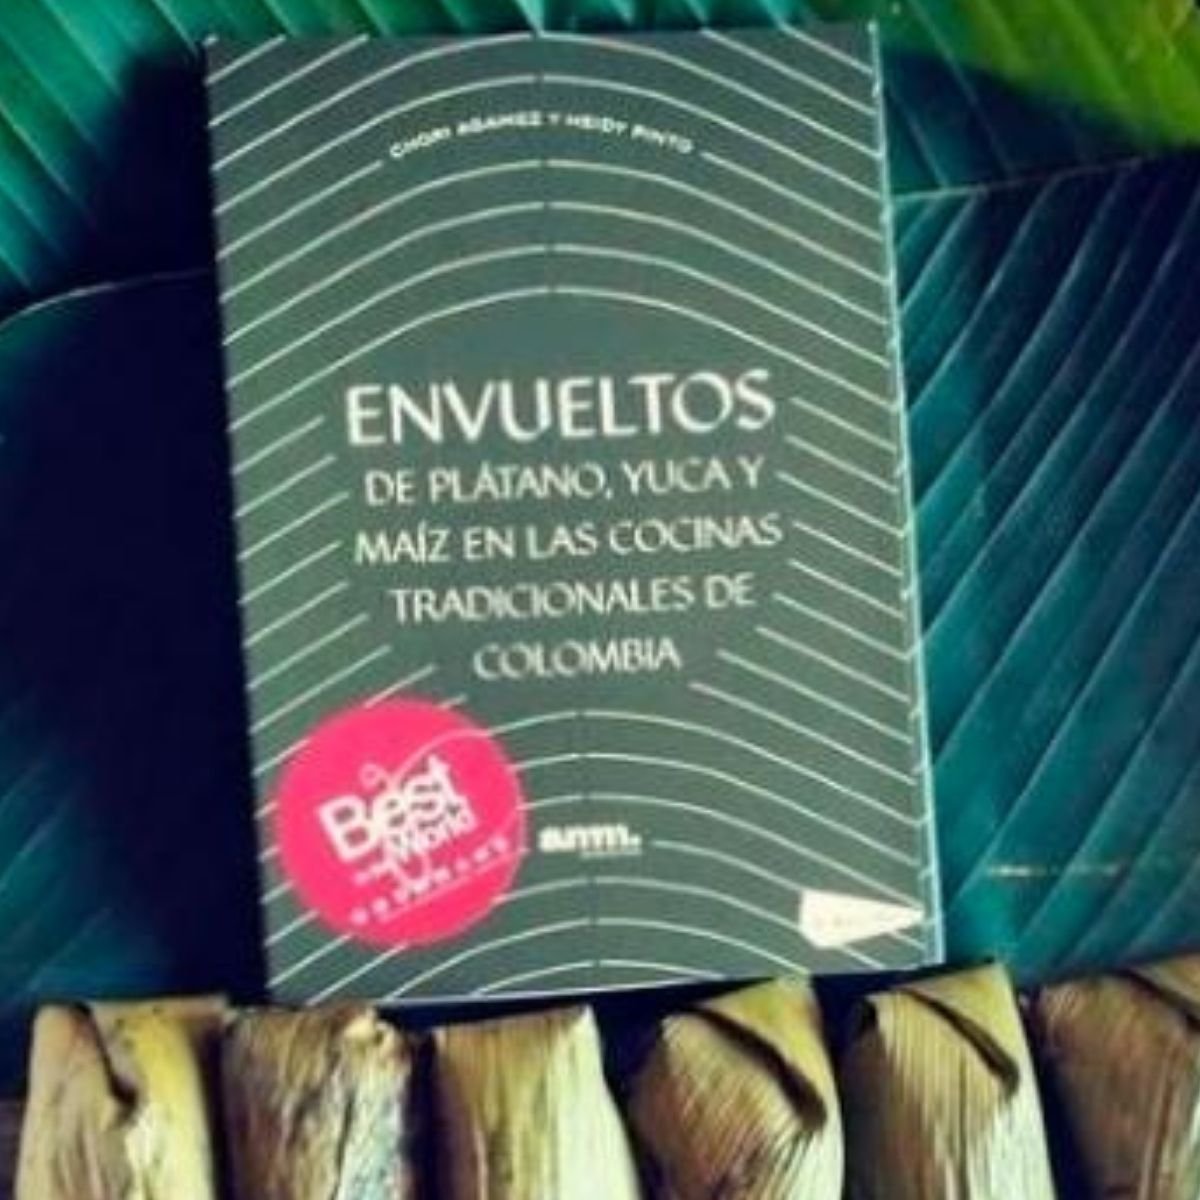 Envueltos, najbolja knjiga recepata / foto: print screen Instagram